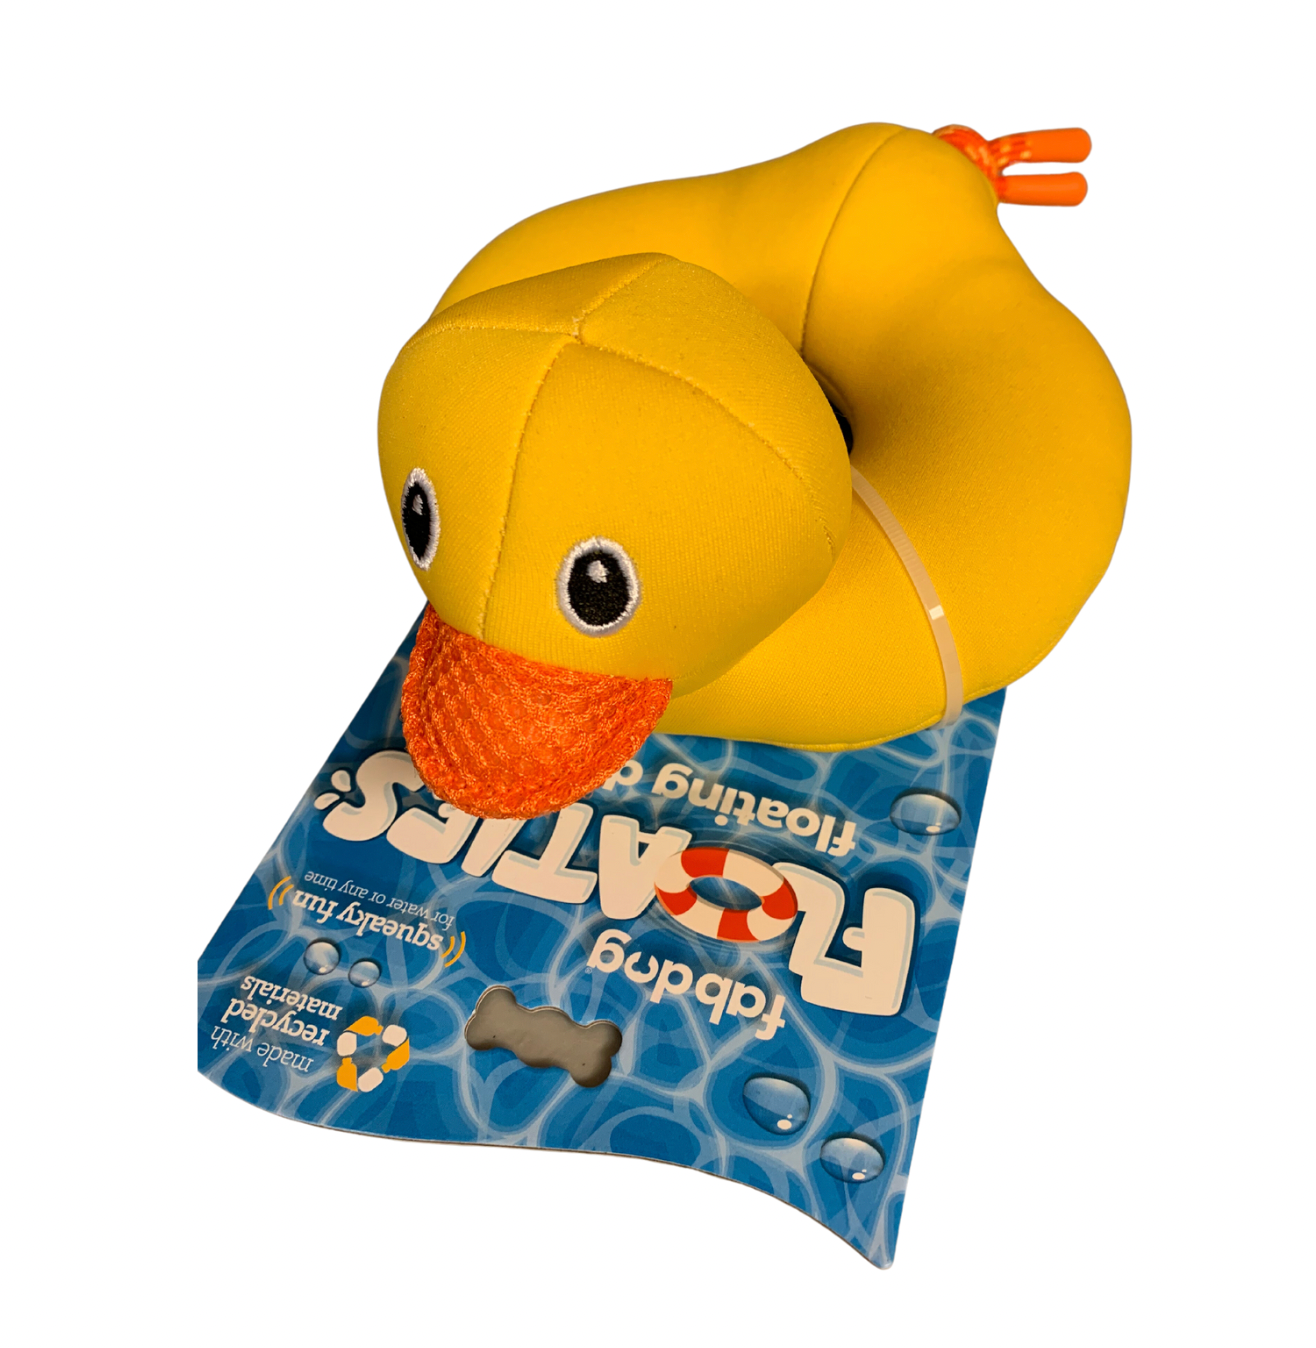 FabDog "Floaties" Floating Squeaky Dog Toy, Duck